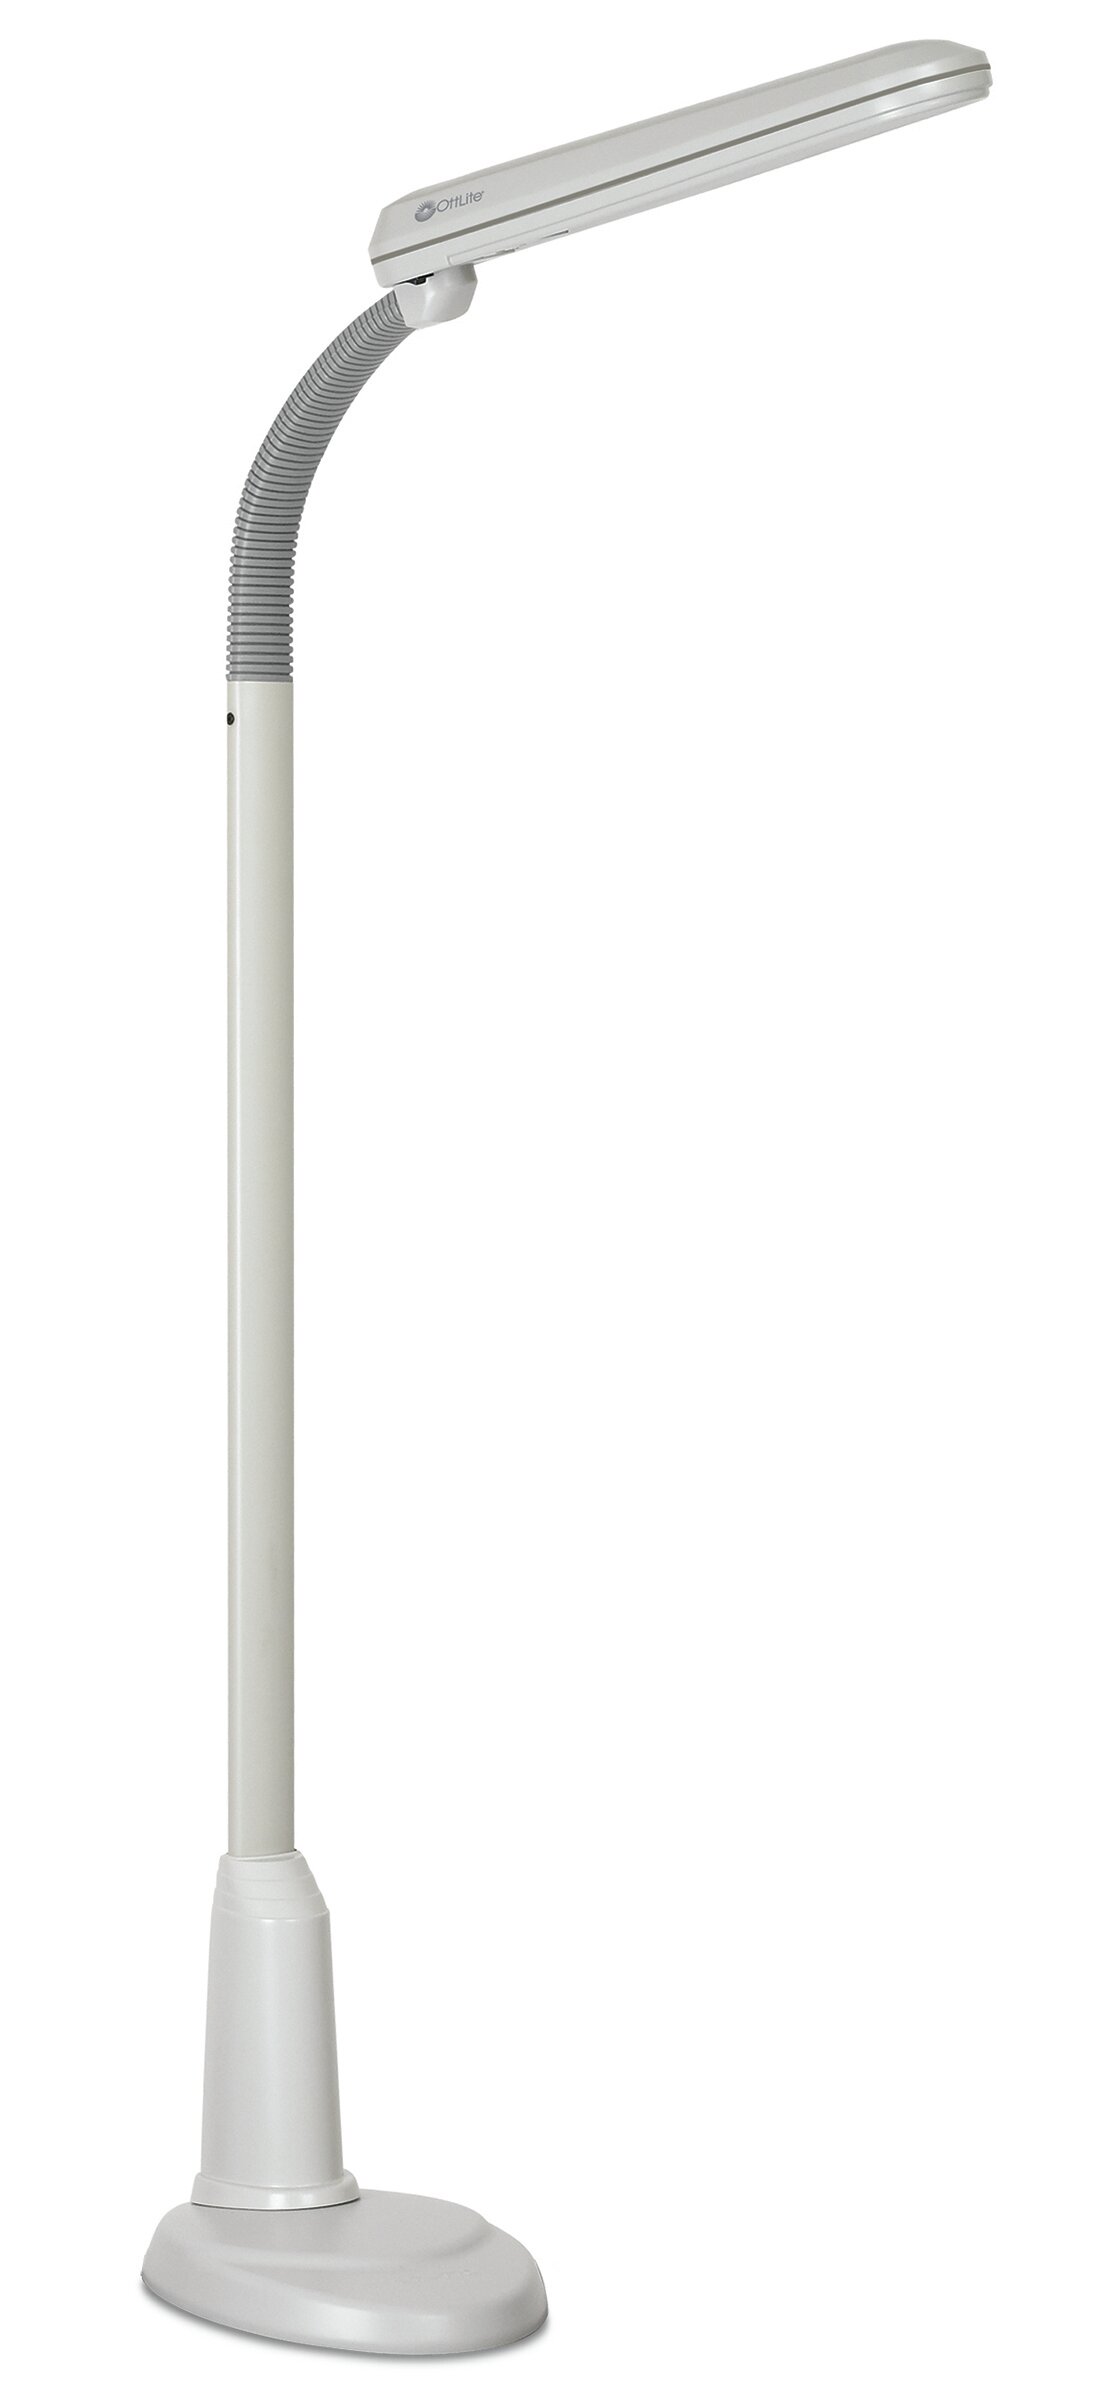 OttLite Standing Floor Lamp Adjustable Neck, Craft Plus, 24wLamp for Bright Natural  Daylight  Reviews Wayfair